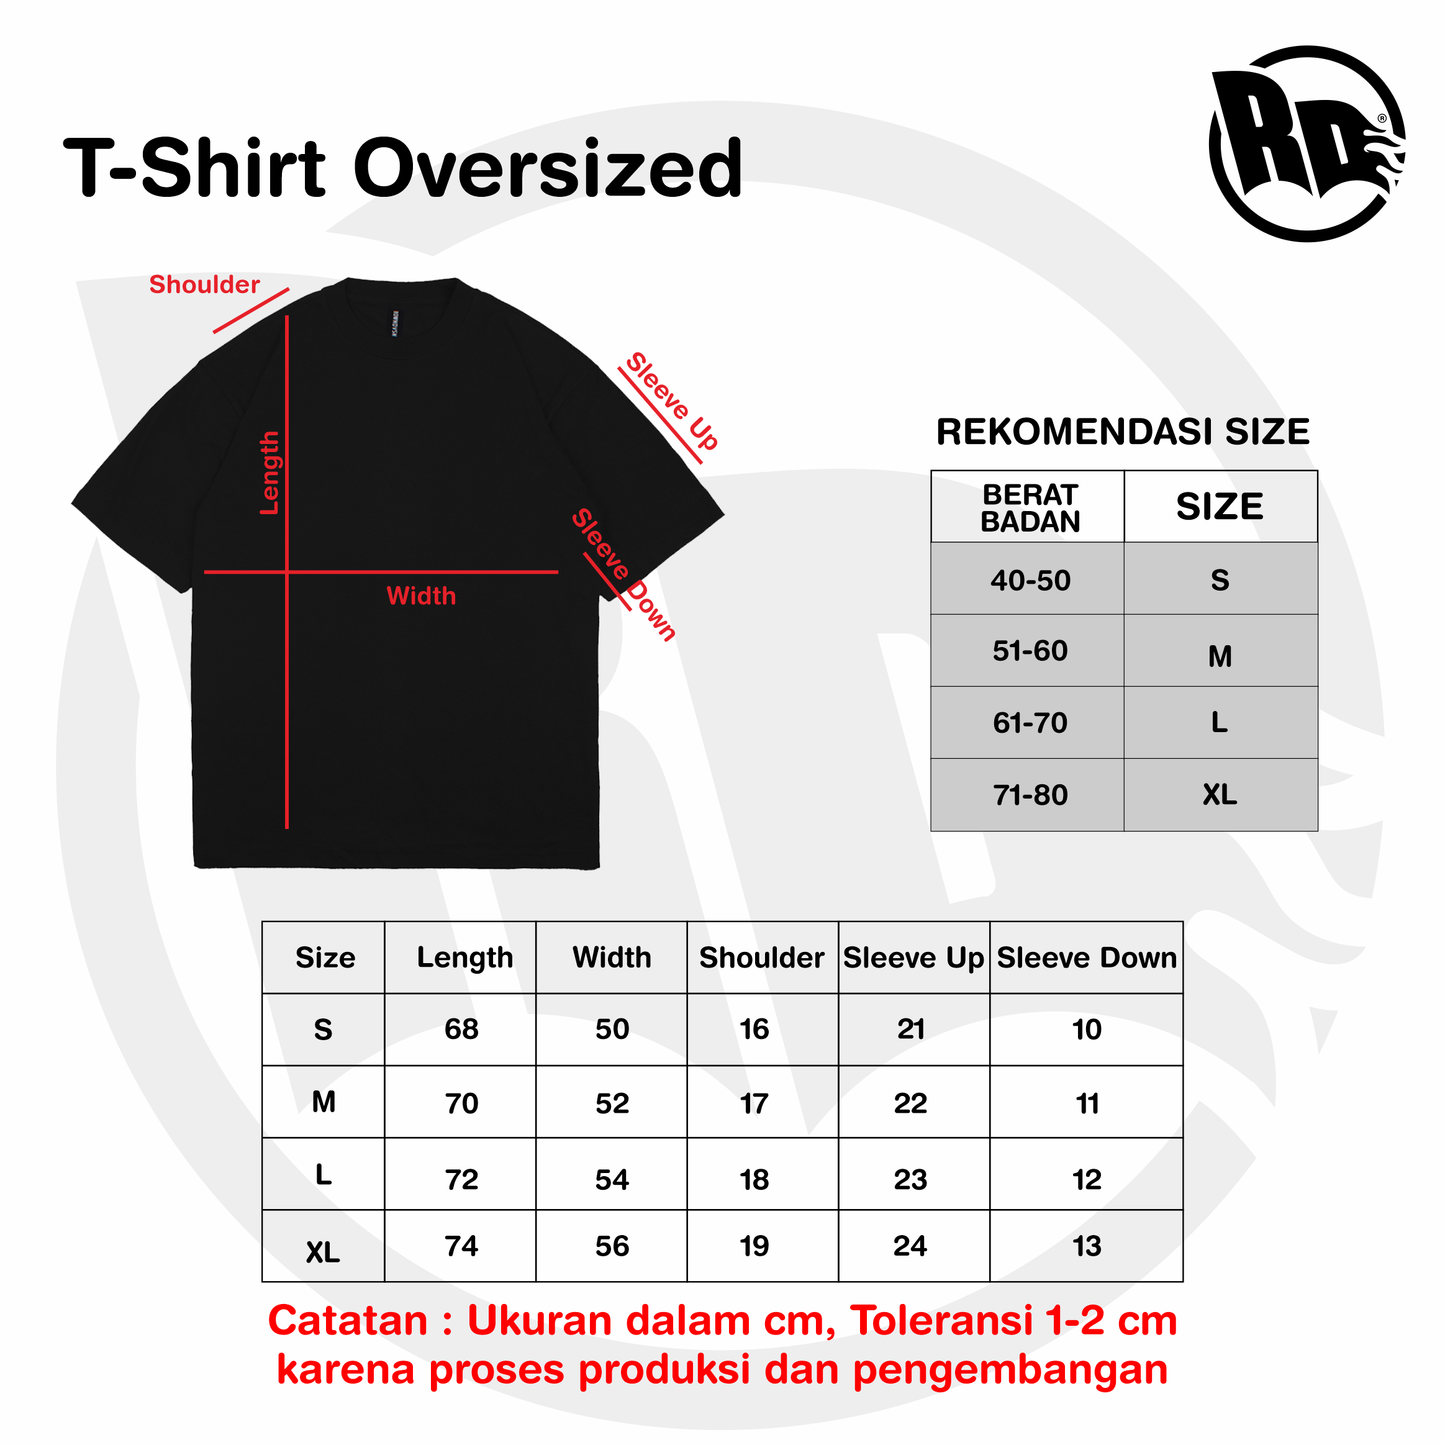 Rown Division X Gabriel Prince T-Shirt Oversize Shaka Black